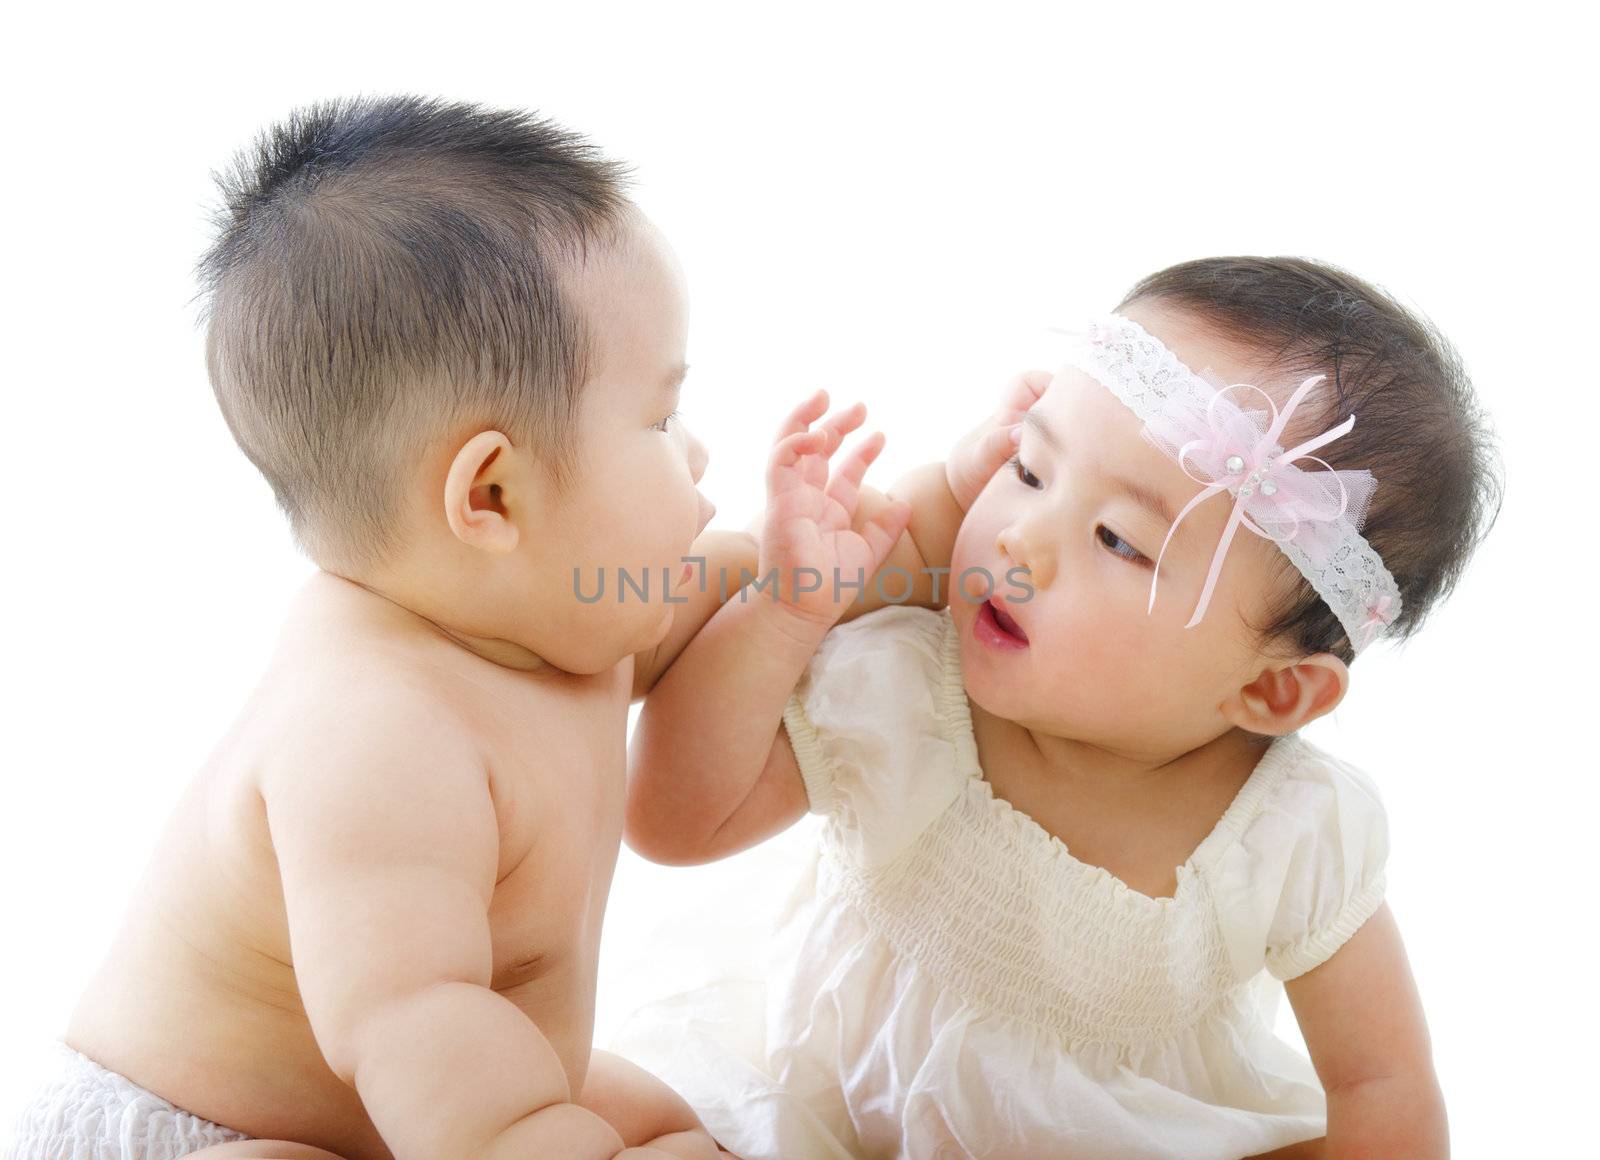 Two Asian babies having baby talk